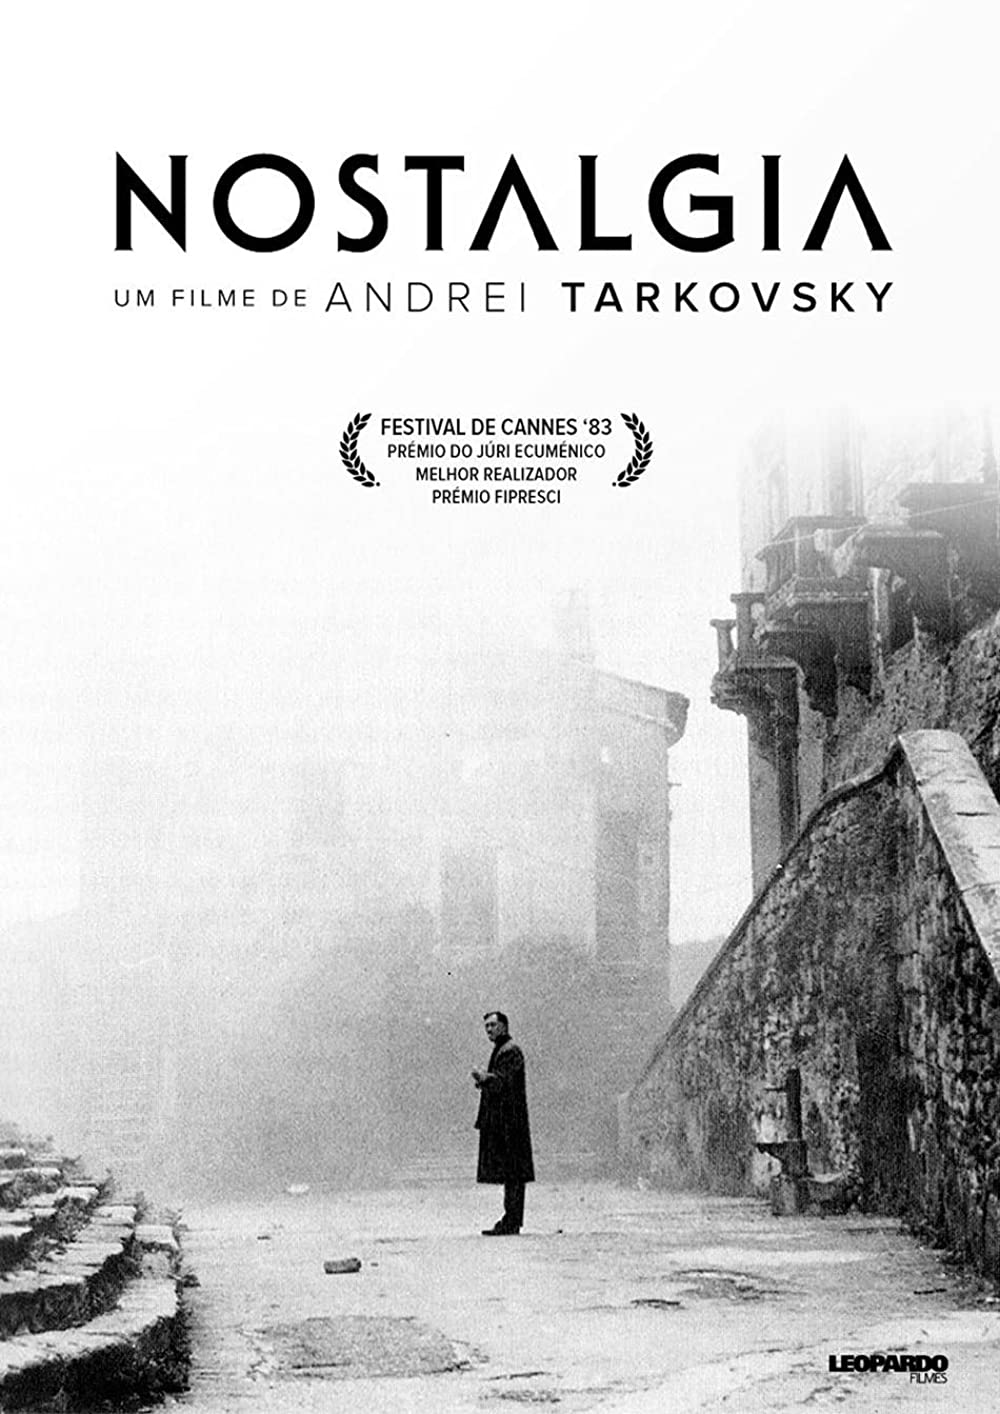 Filmbeschreibung zu Nostalghia